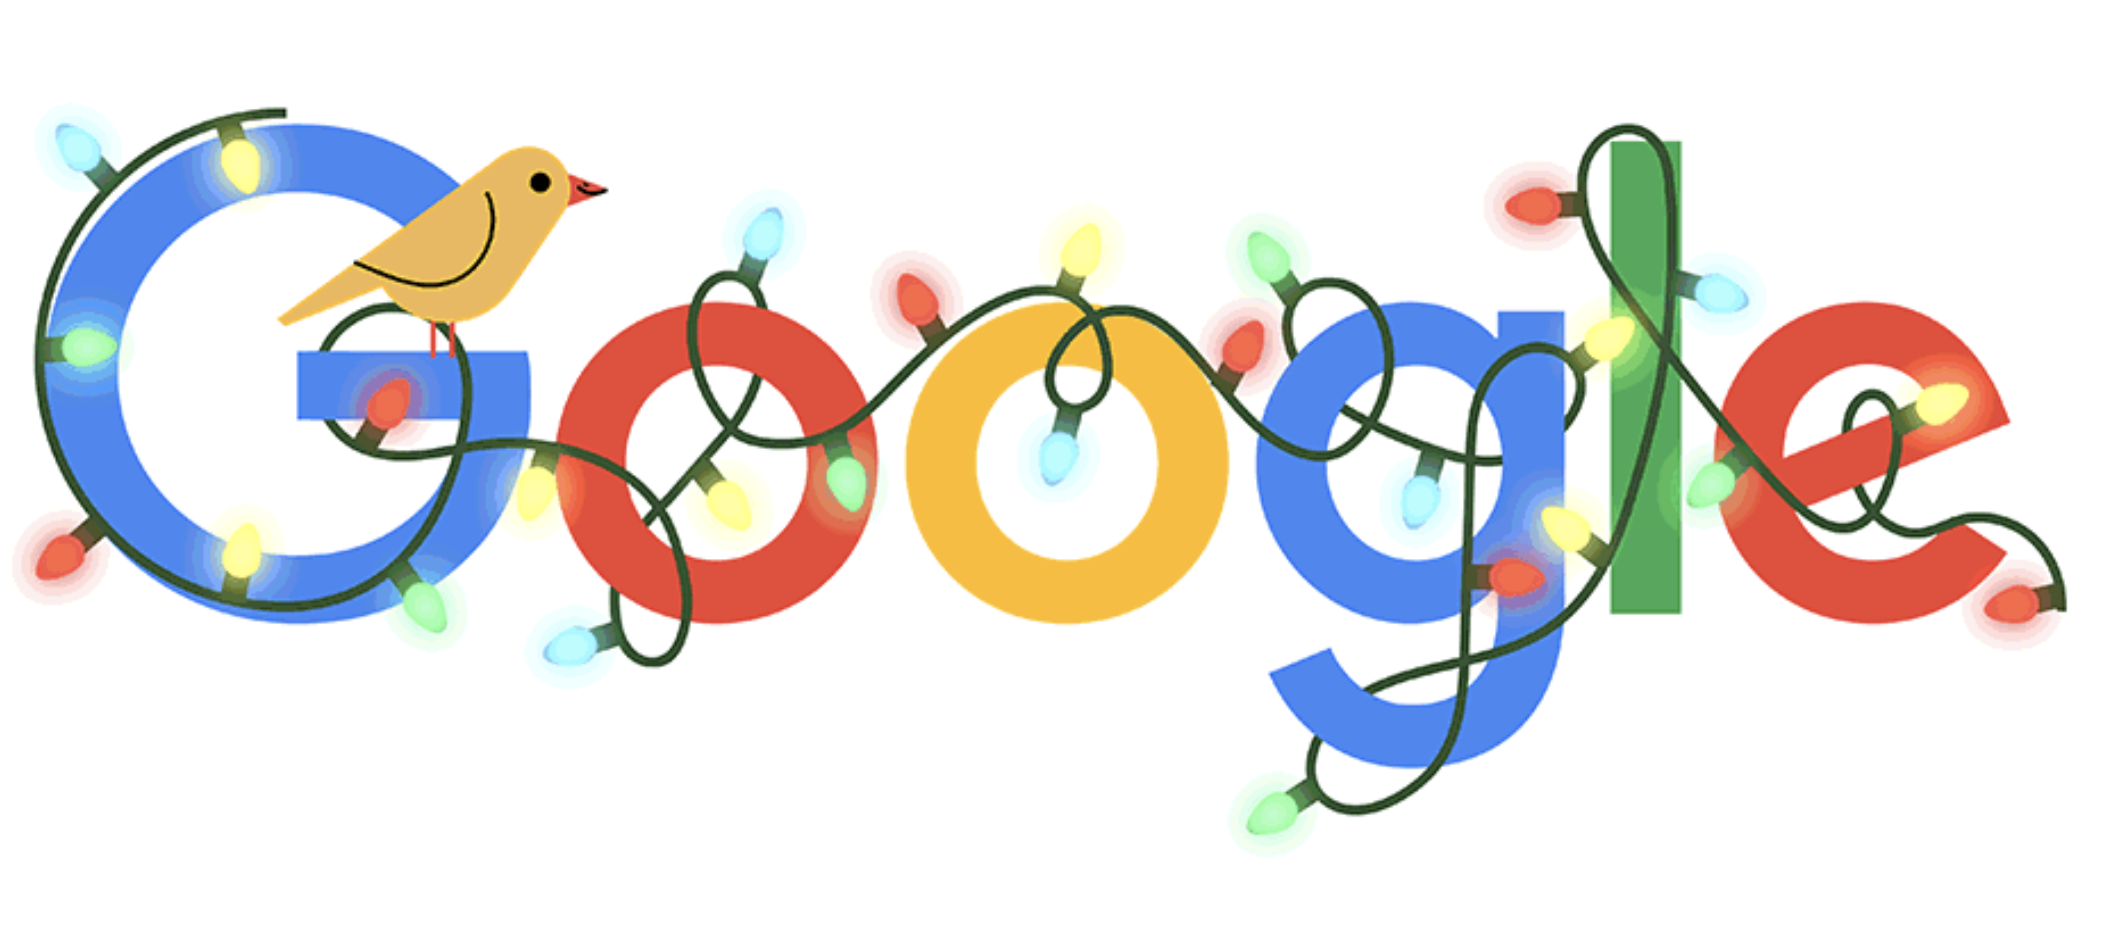 Google Logo with Festive Lights